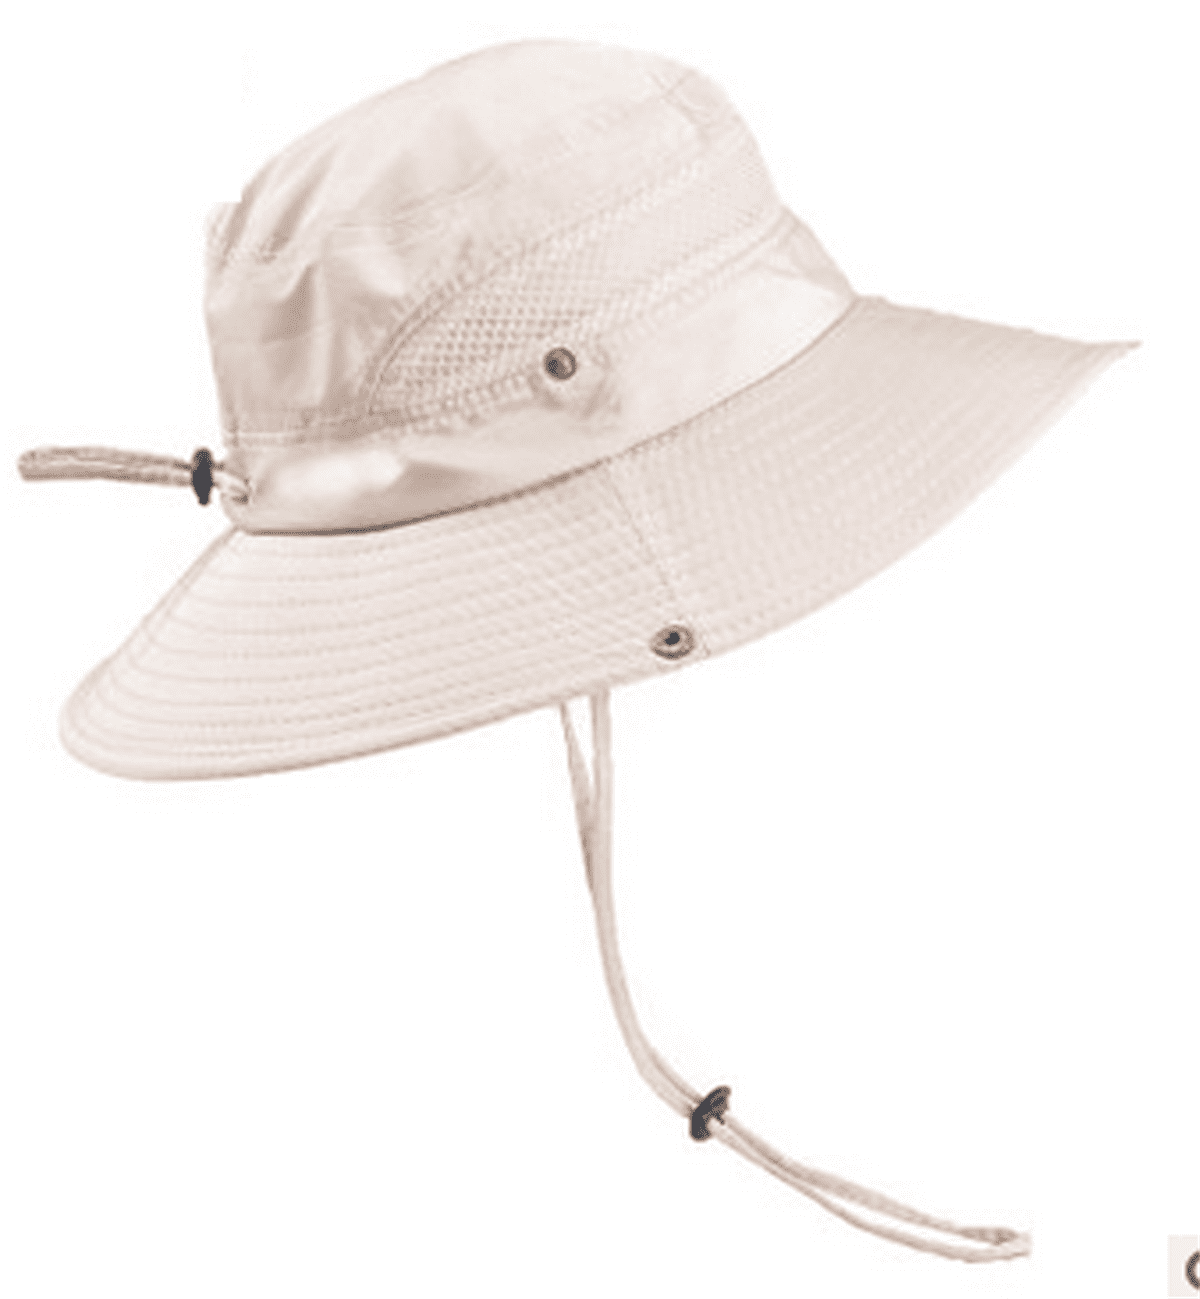 US Men's Summer Sun Hat Bucket Fishing Hiking Cap Wide Brim UV Protection Hat AI 